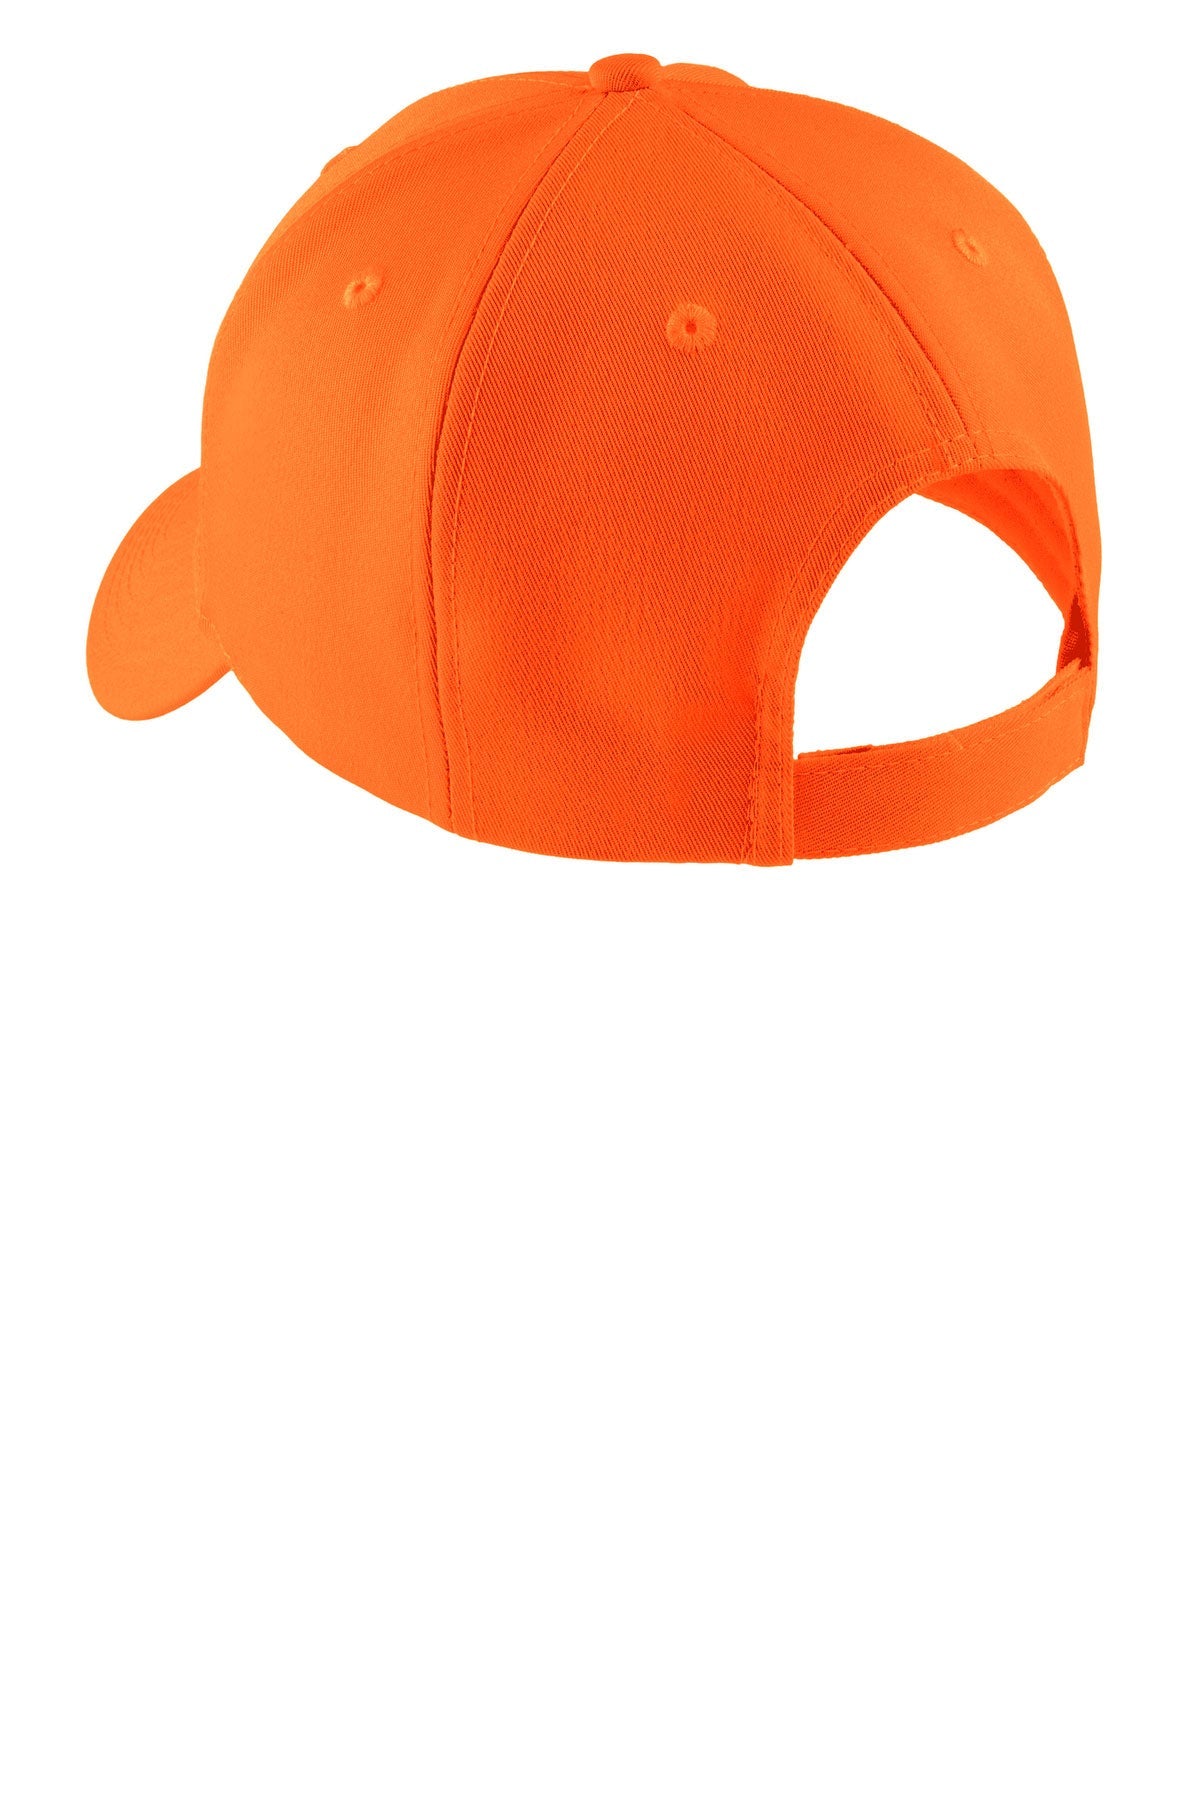 Port Authority Solid Enhanced Custom Visibility Caps, Safety Orange